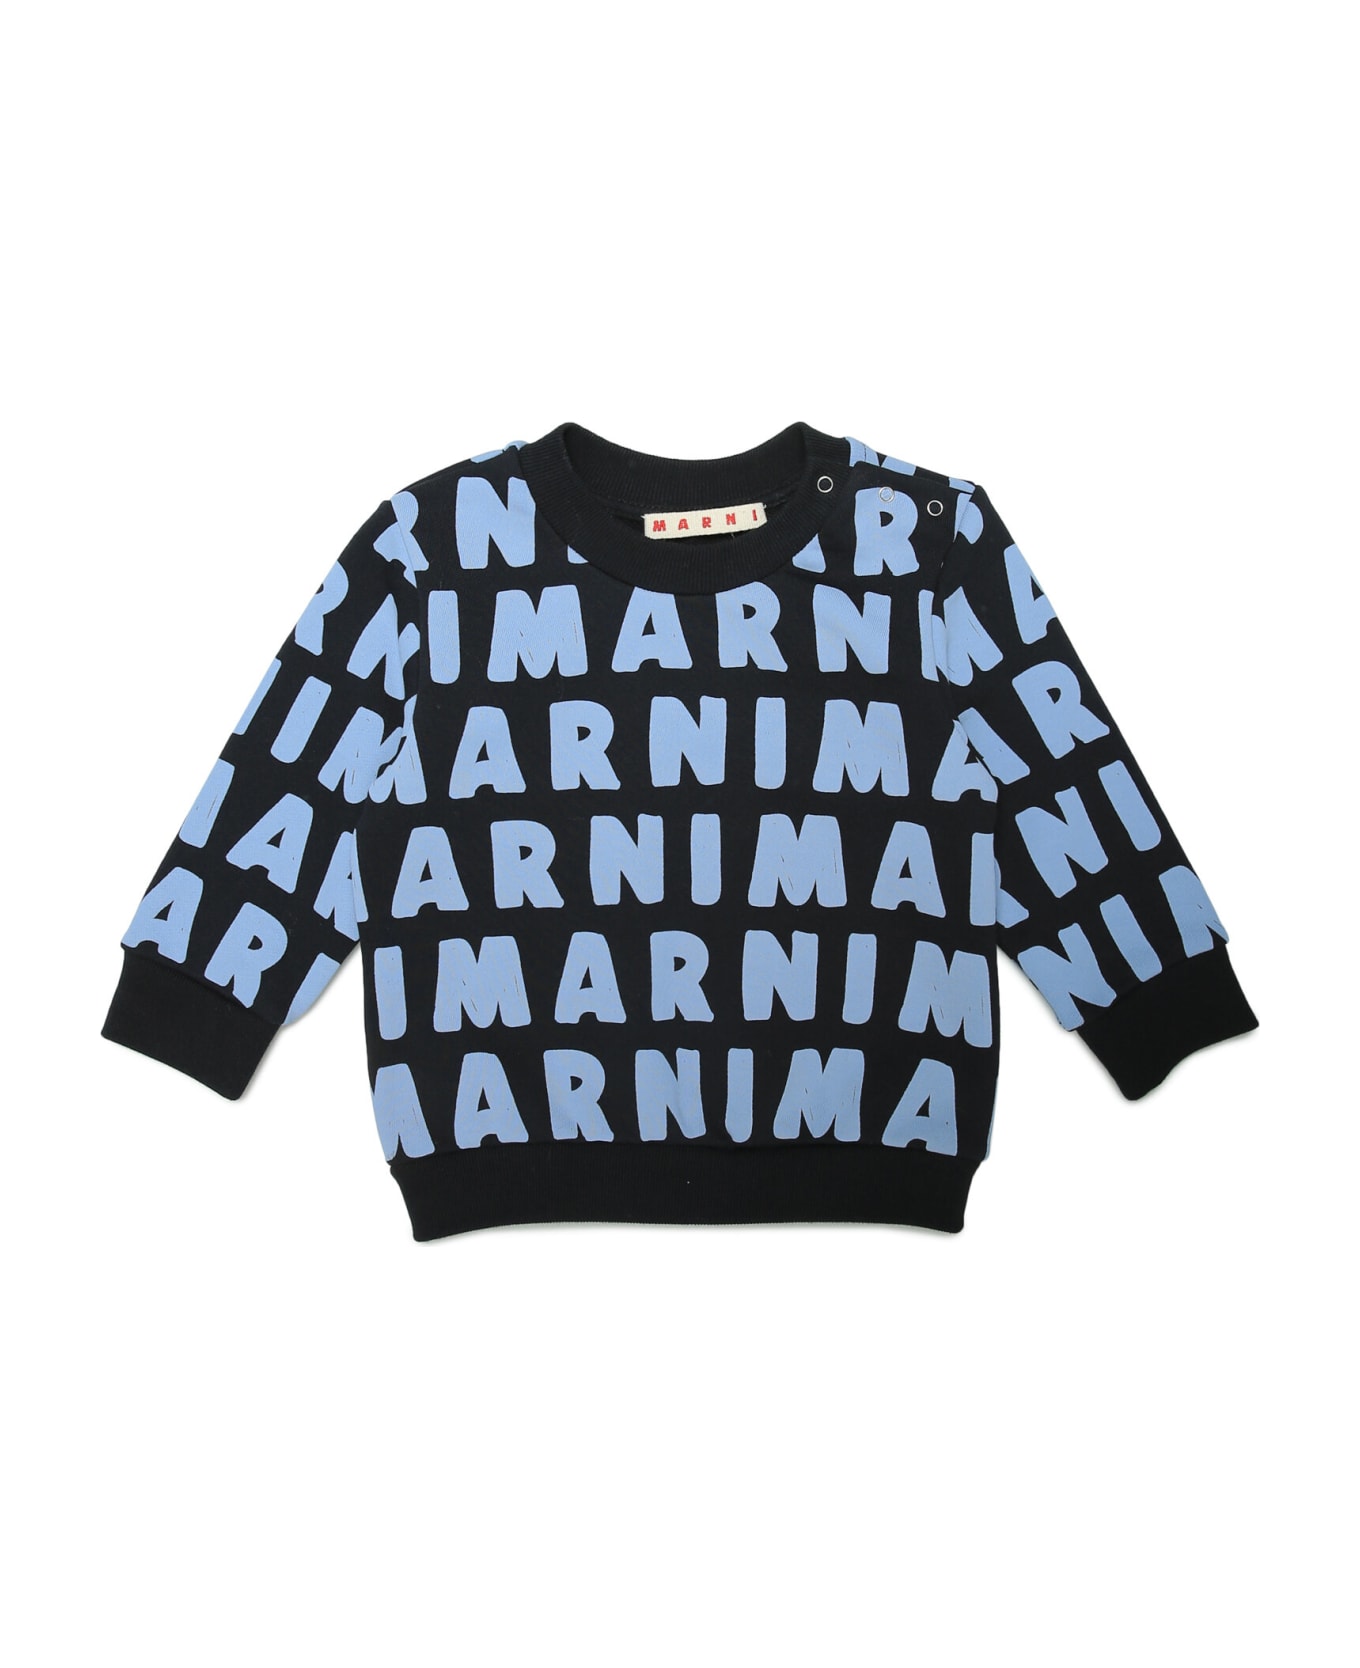 Marni Ms30b Sweat-shirt Marni - Blue navy